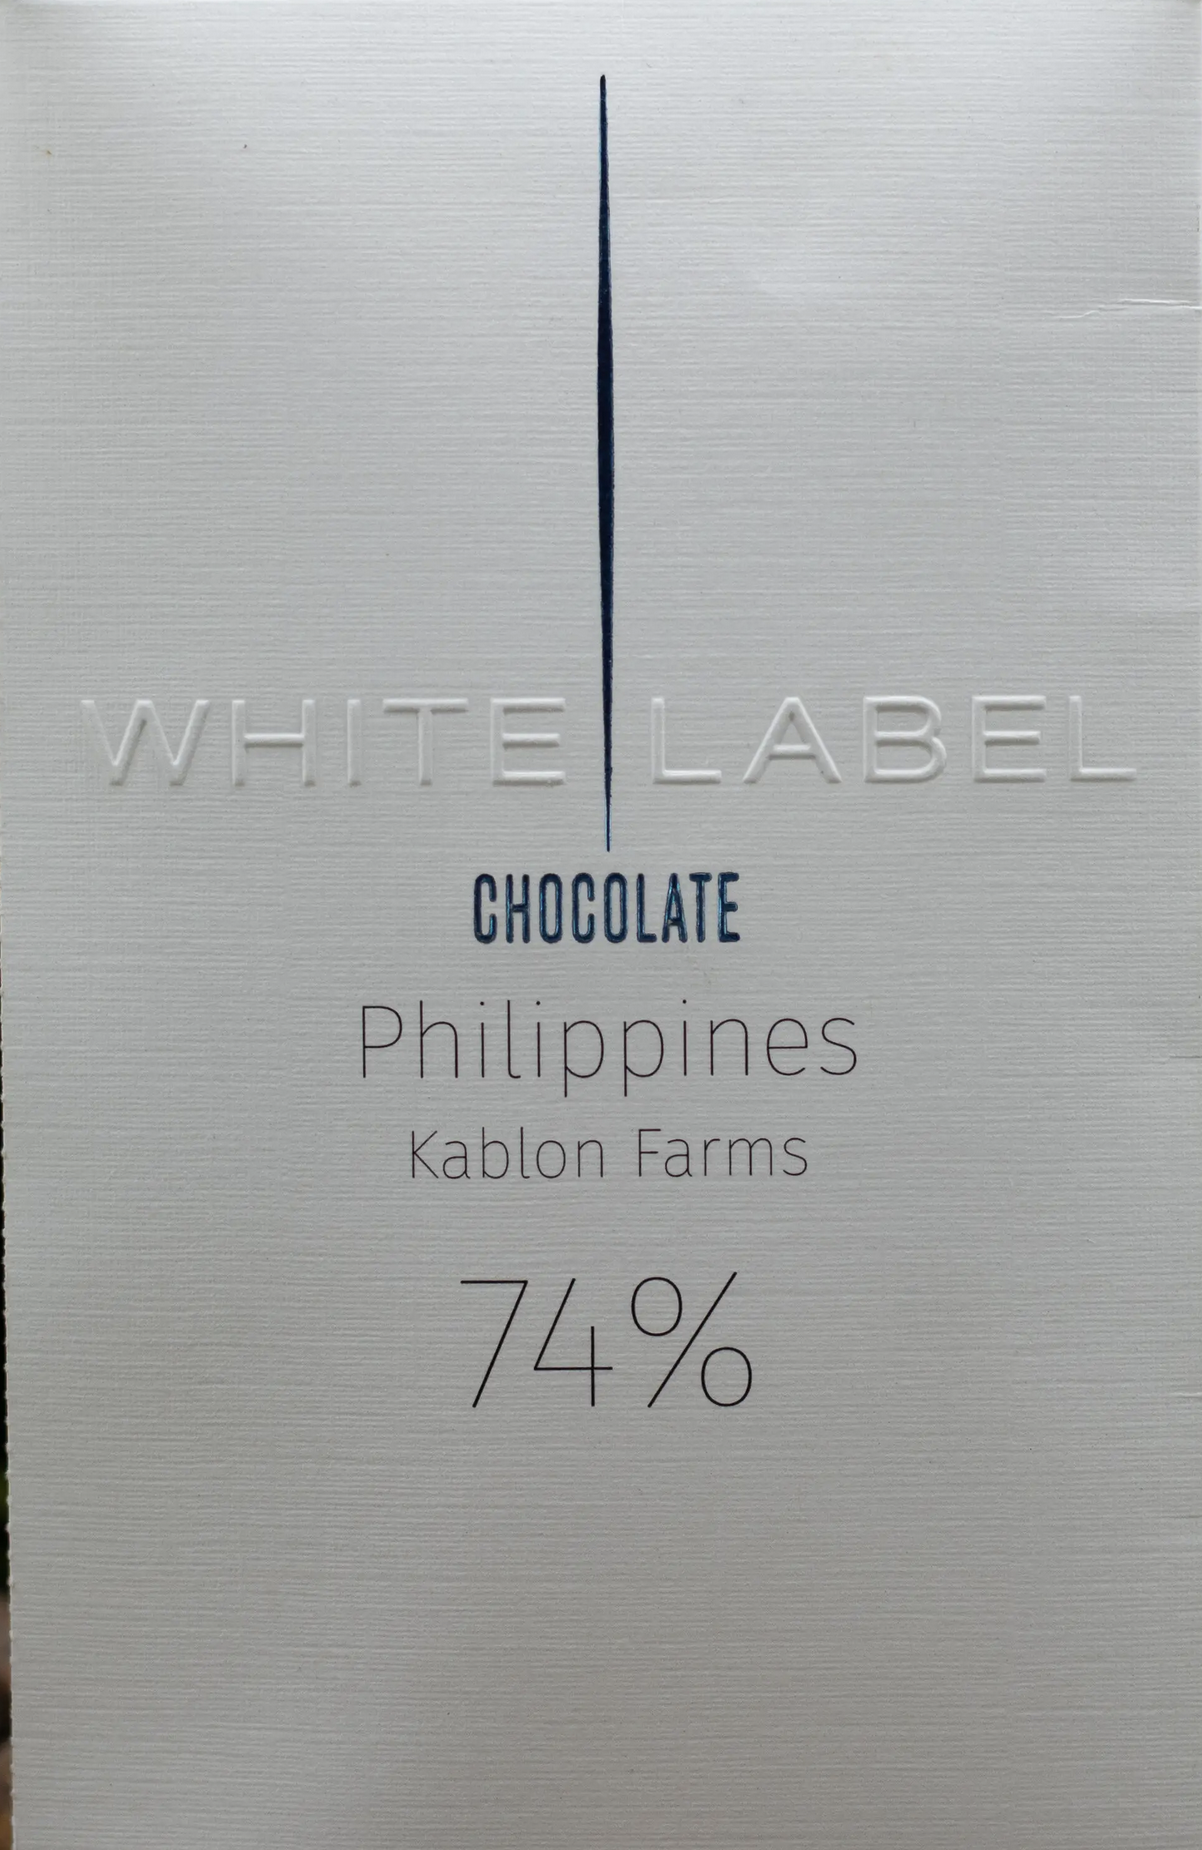 WHITE LABEL Chocolate | Dunkle Schokolade »Philippines - Kablon Farms« 74% | 65g